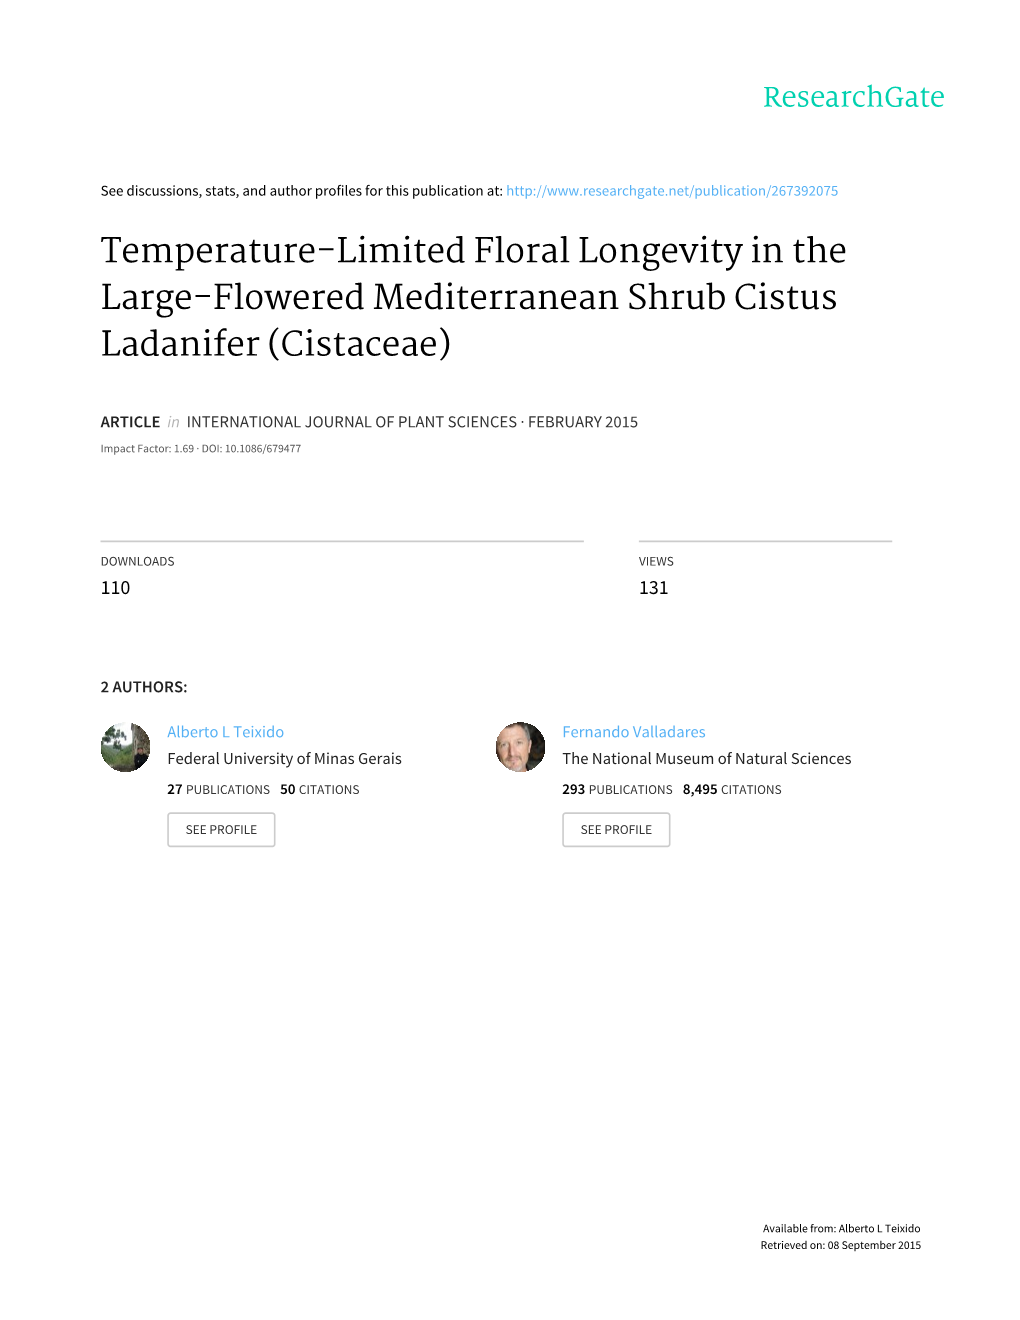 Temperature-Limited Floral Longevity in the Large-Flowered Mediterranean Shrub Cistus Ladanifer (Cistaceae)